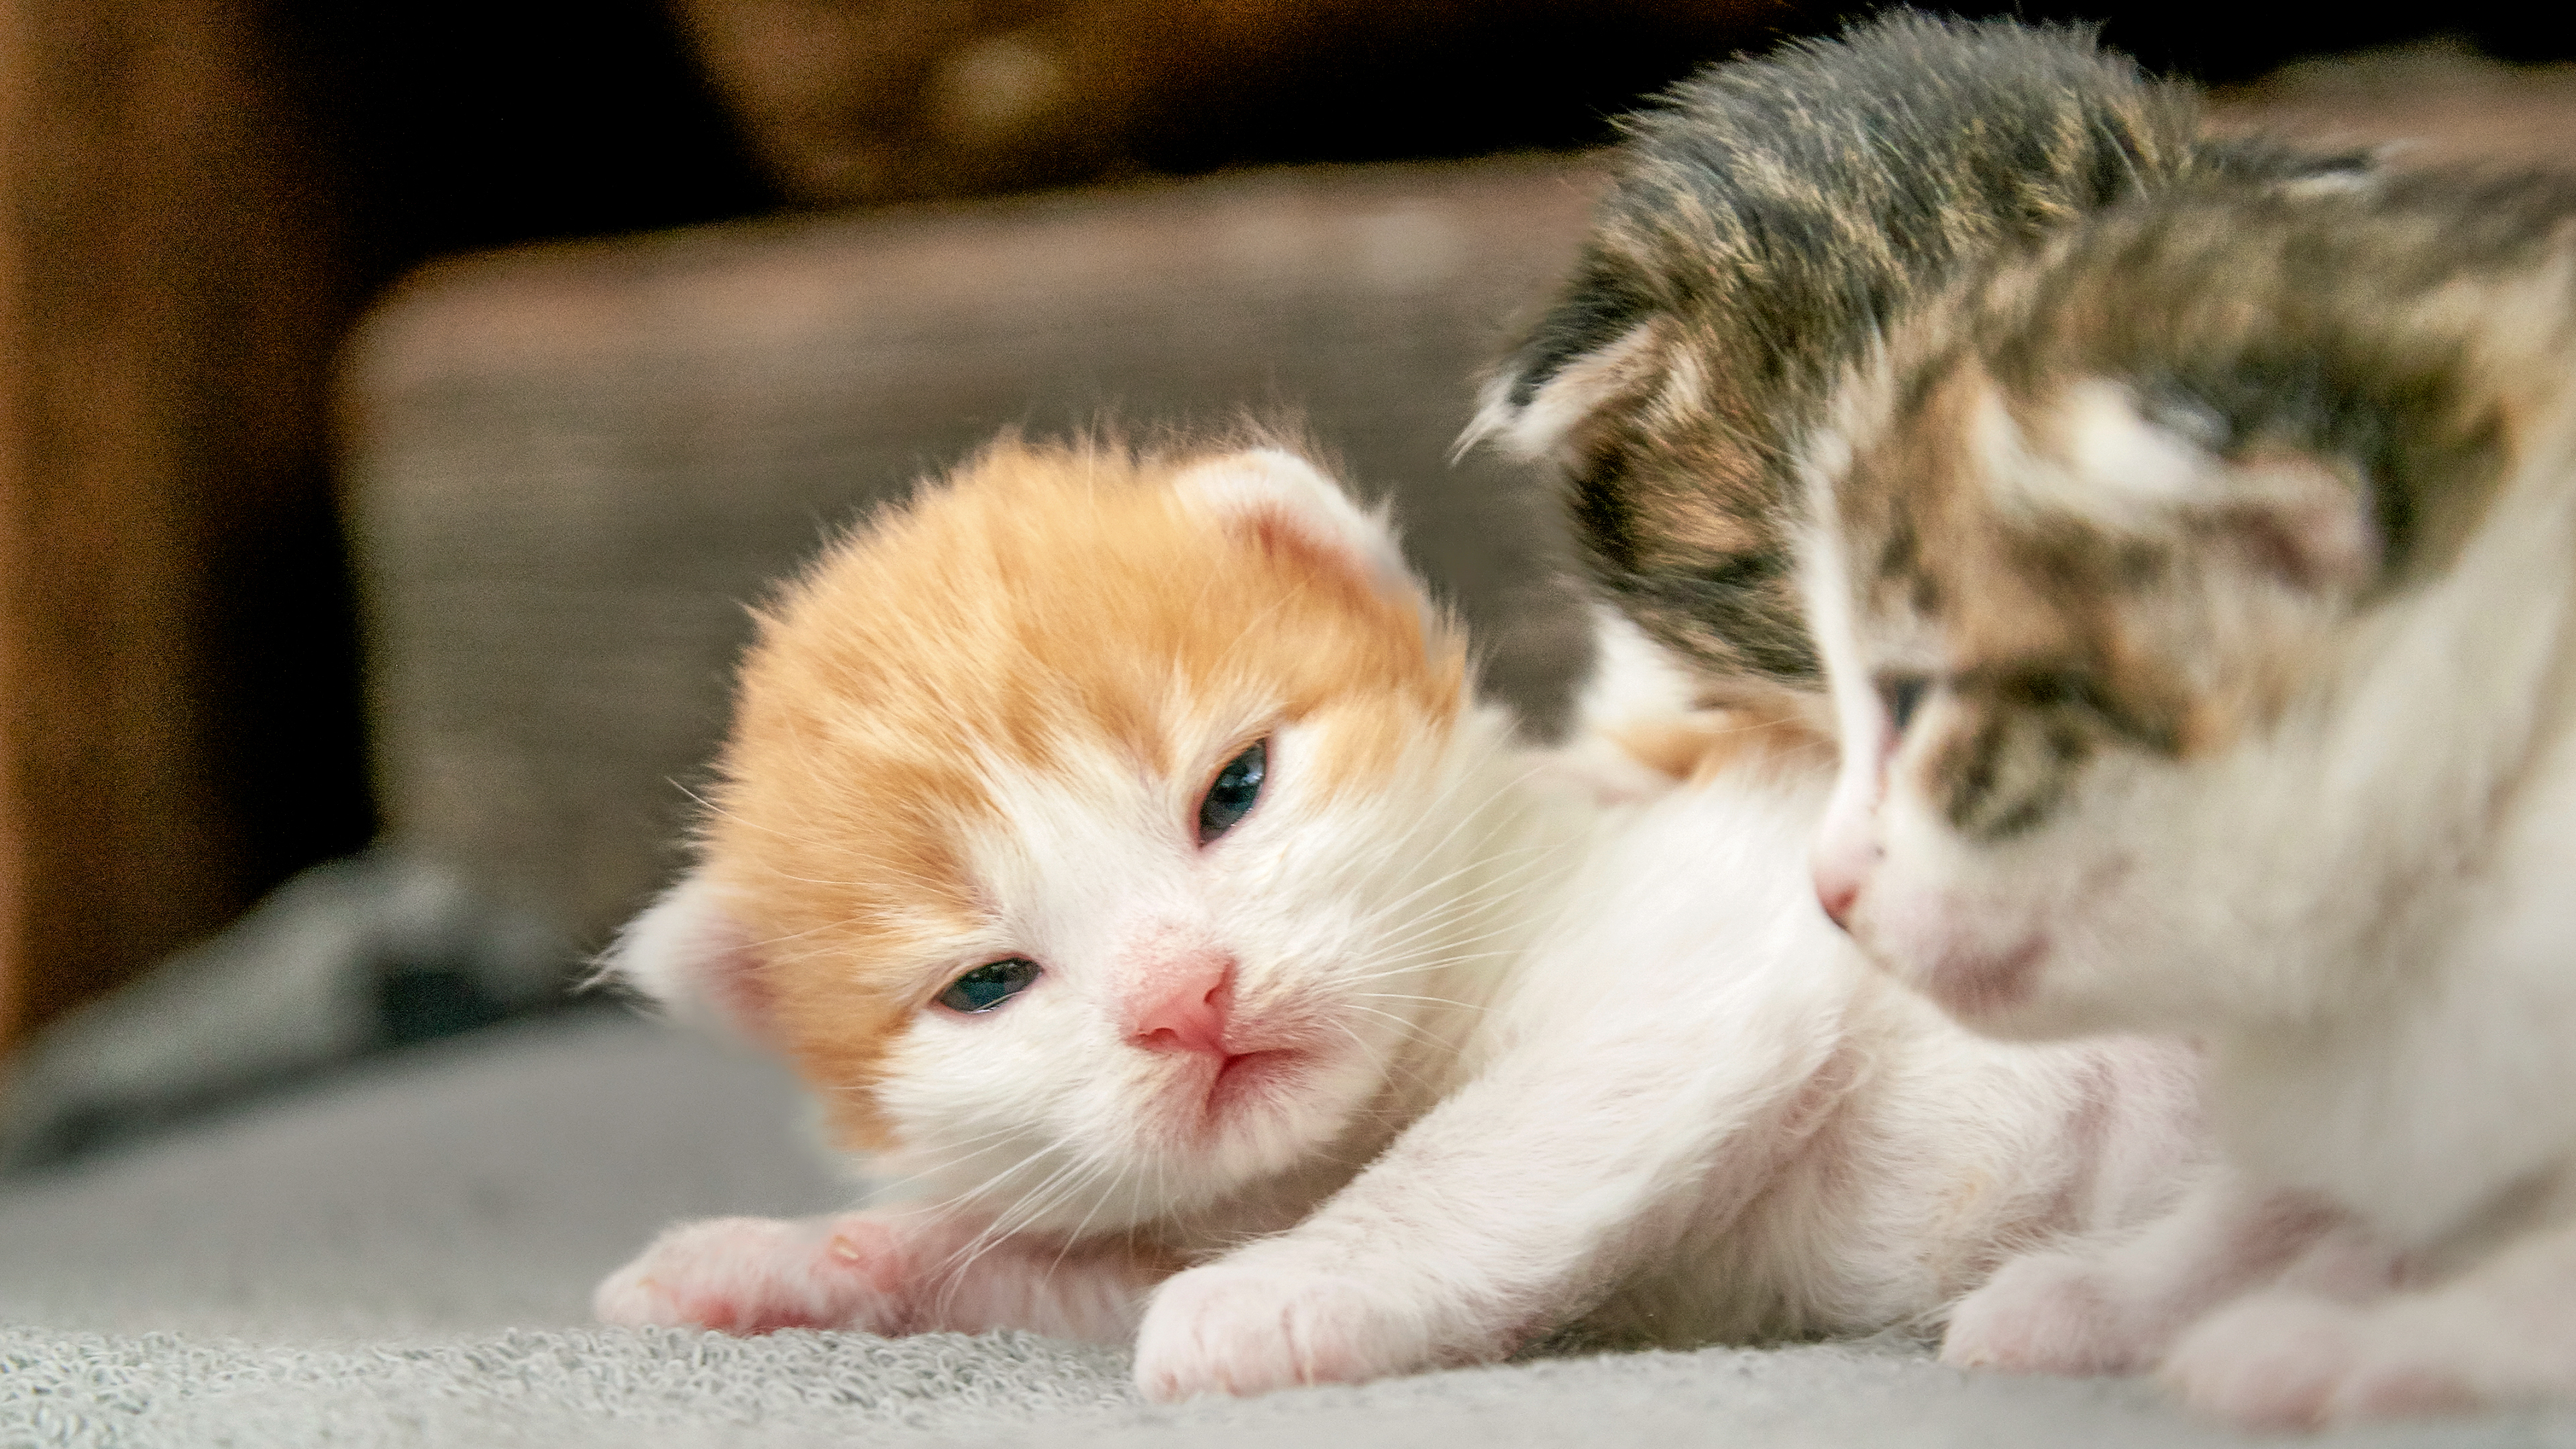 looking after newborn kittens